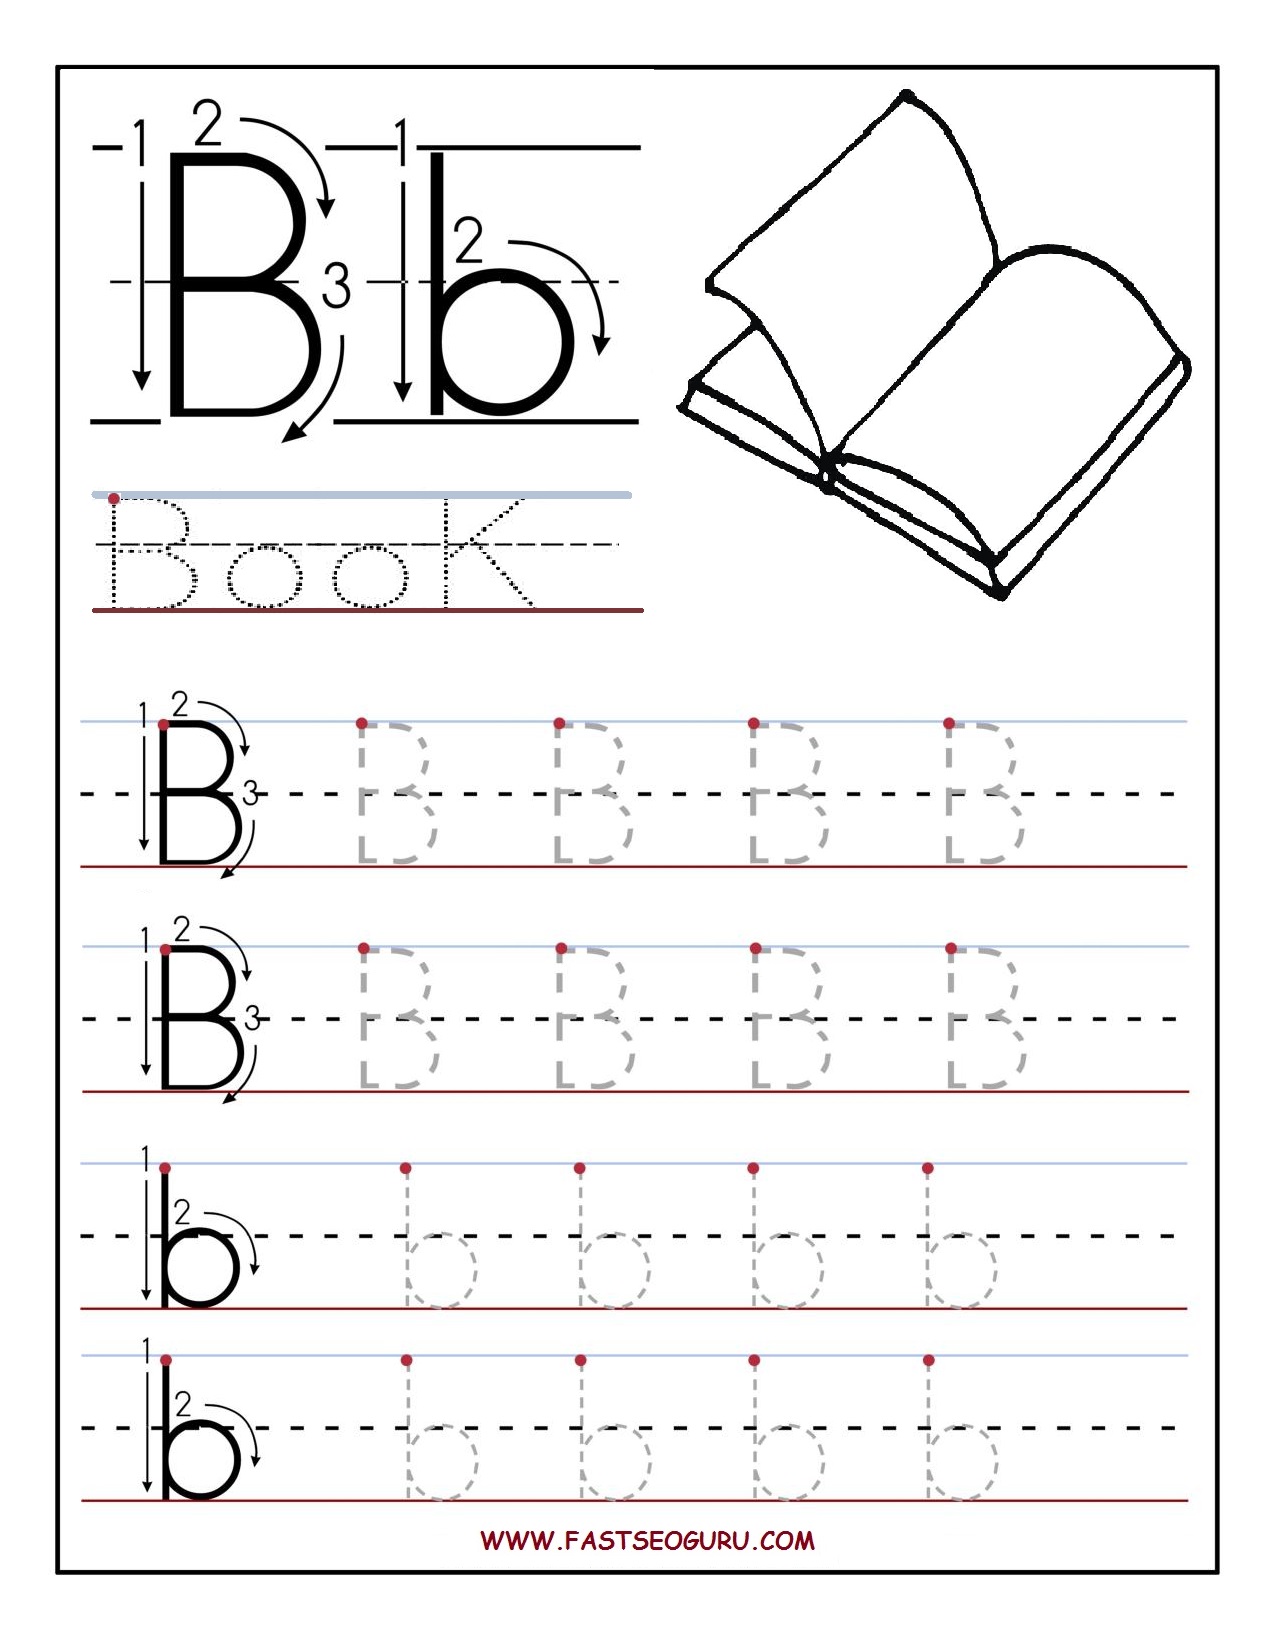 letter-b-printable-worksheets